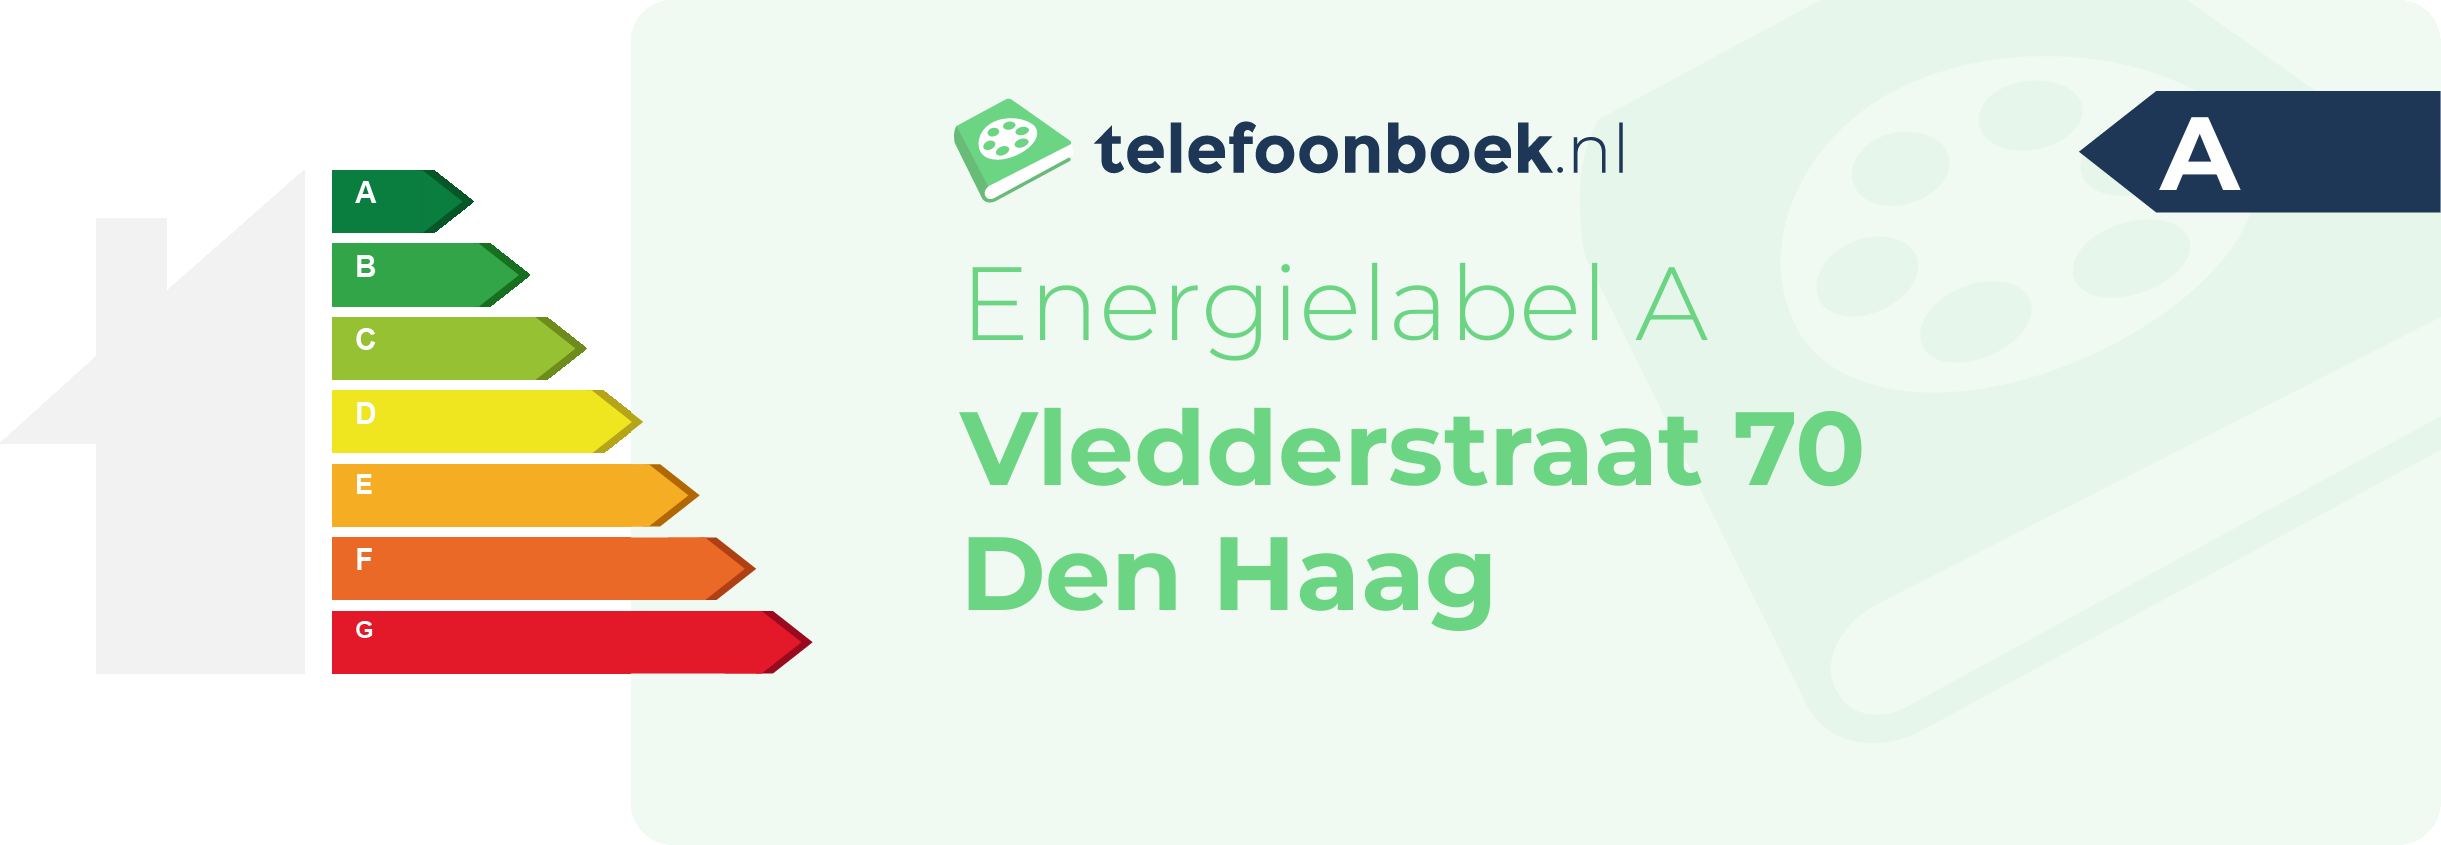 Energielabel Vledderstraat 70 Den Haag